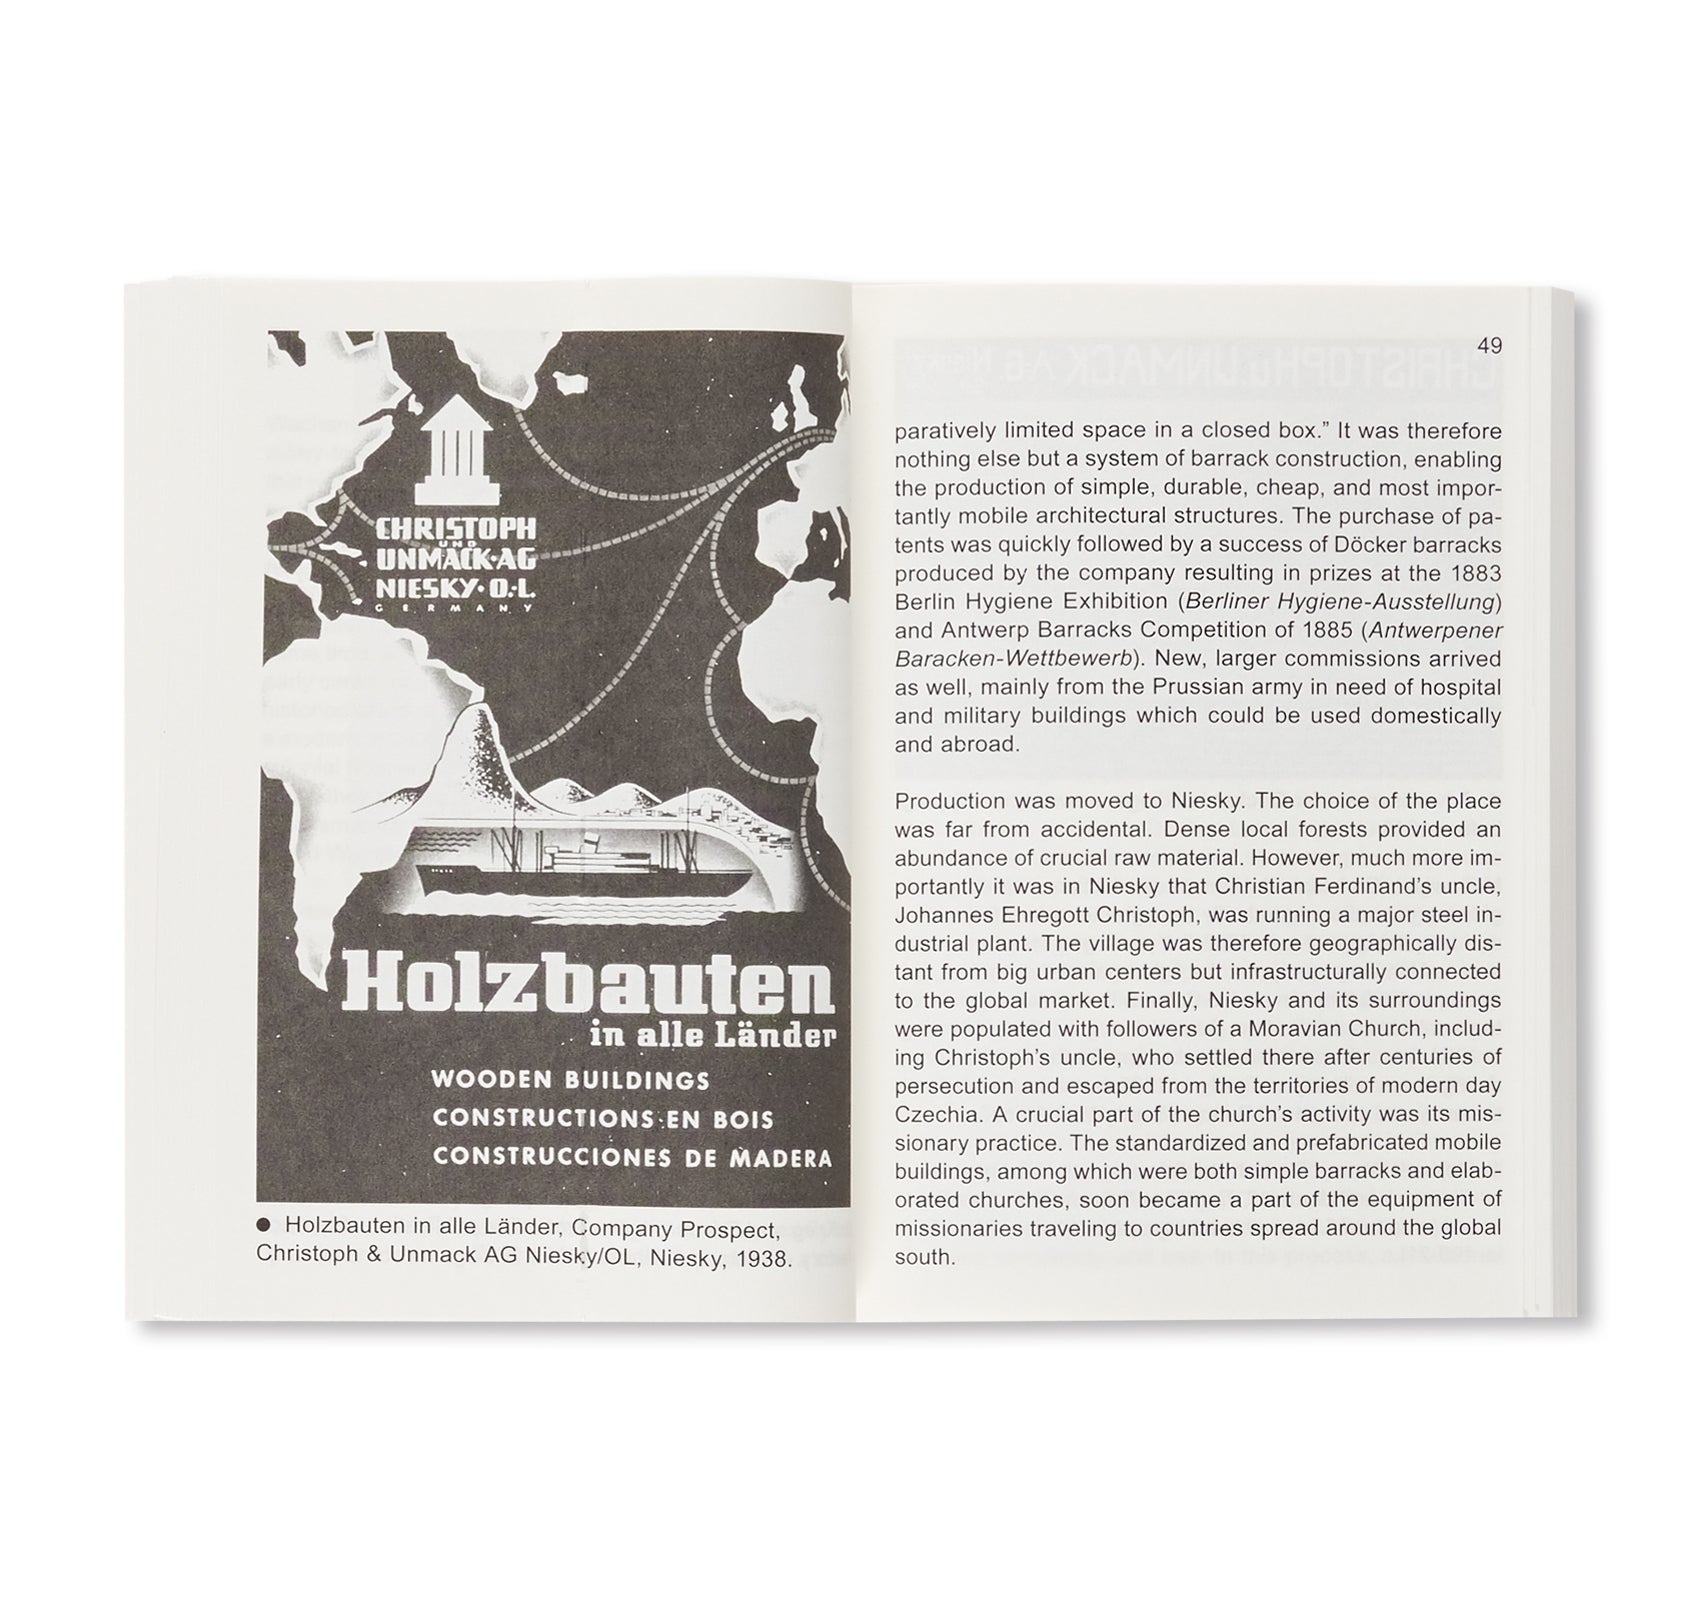 THE ART OF JOINING / Bauhaus Paperback 23 by Stiftung Bauhaus Dessau